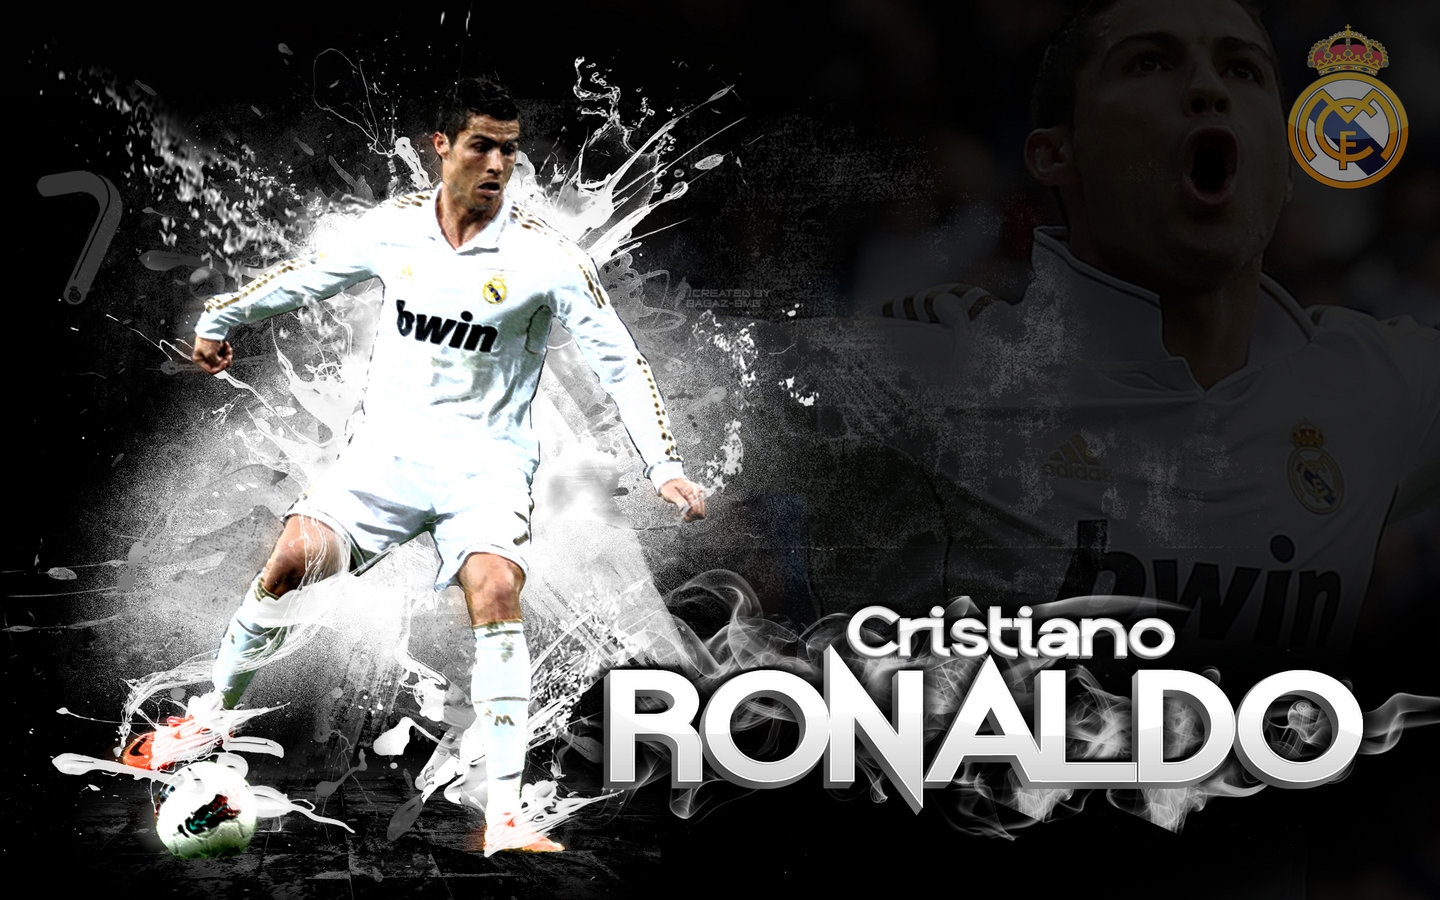 78+] Cristiano Ronaldo Wallpaper Hd - WallpaperSafari